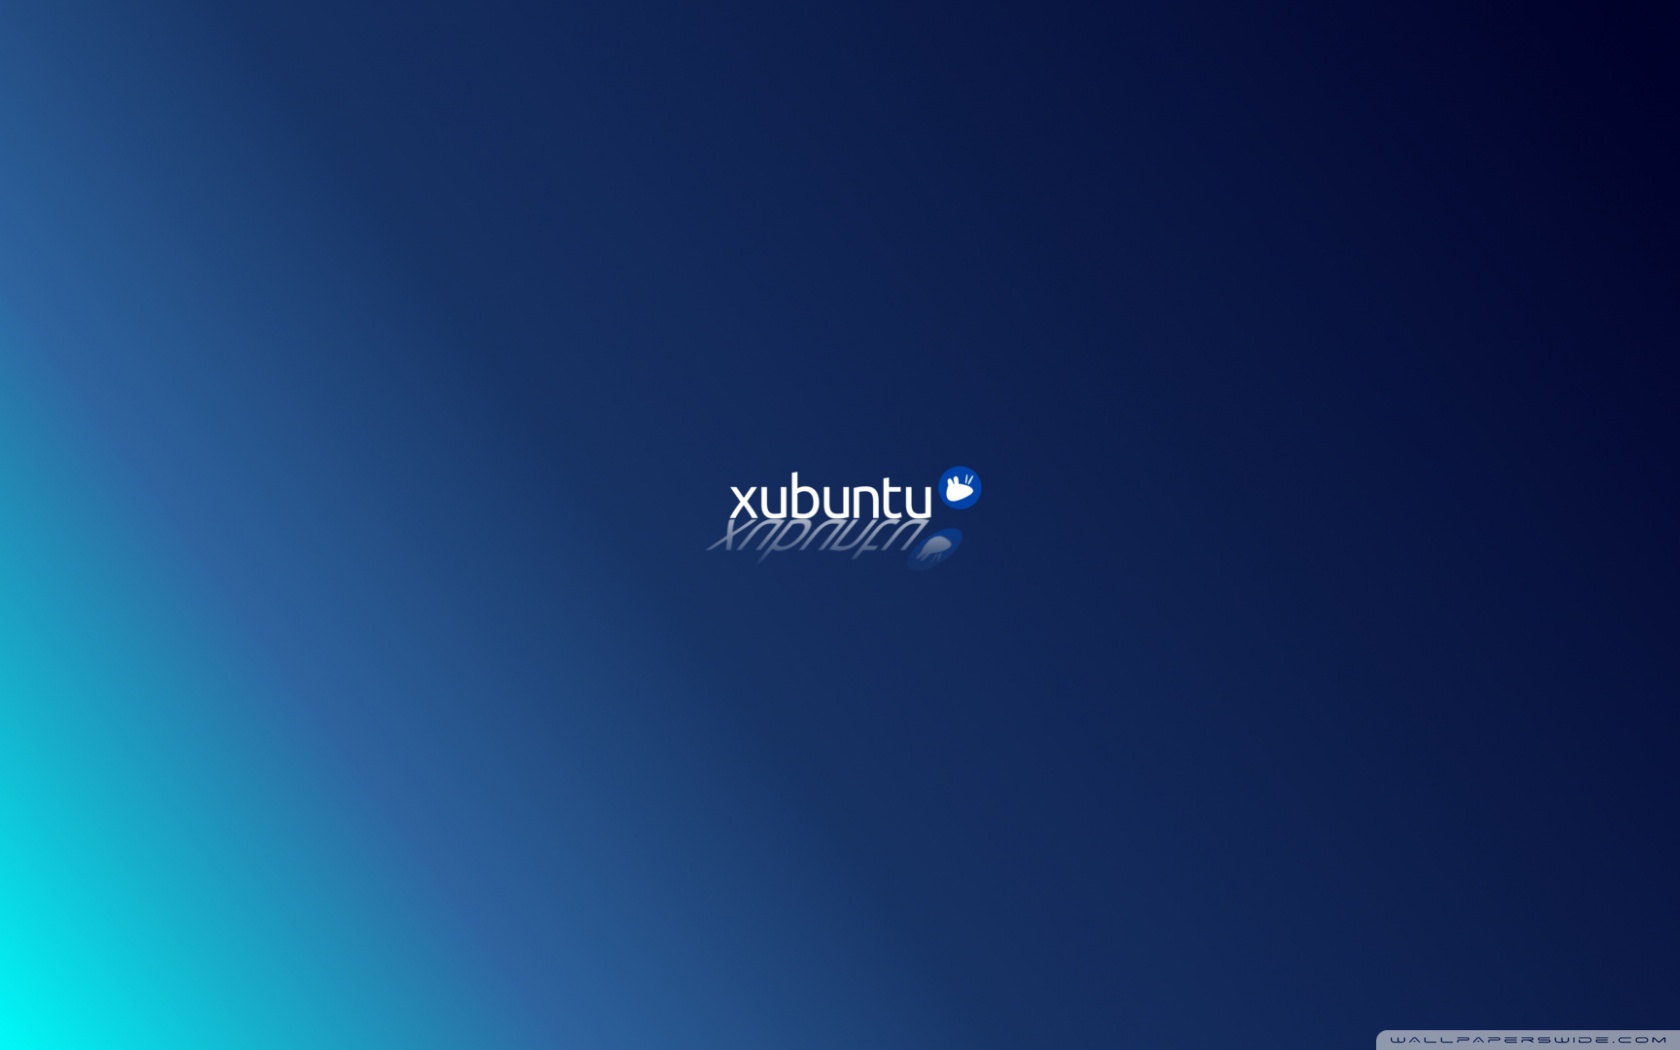 Xubuntu Ultra Hd Desktop Background Wallpaper For 4k Uhd Tv Widescreen Ultrawide Desktop Laptop Tablet Smartphone